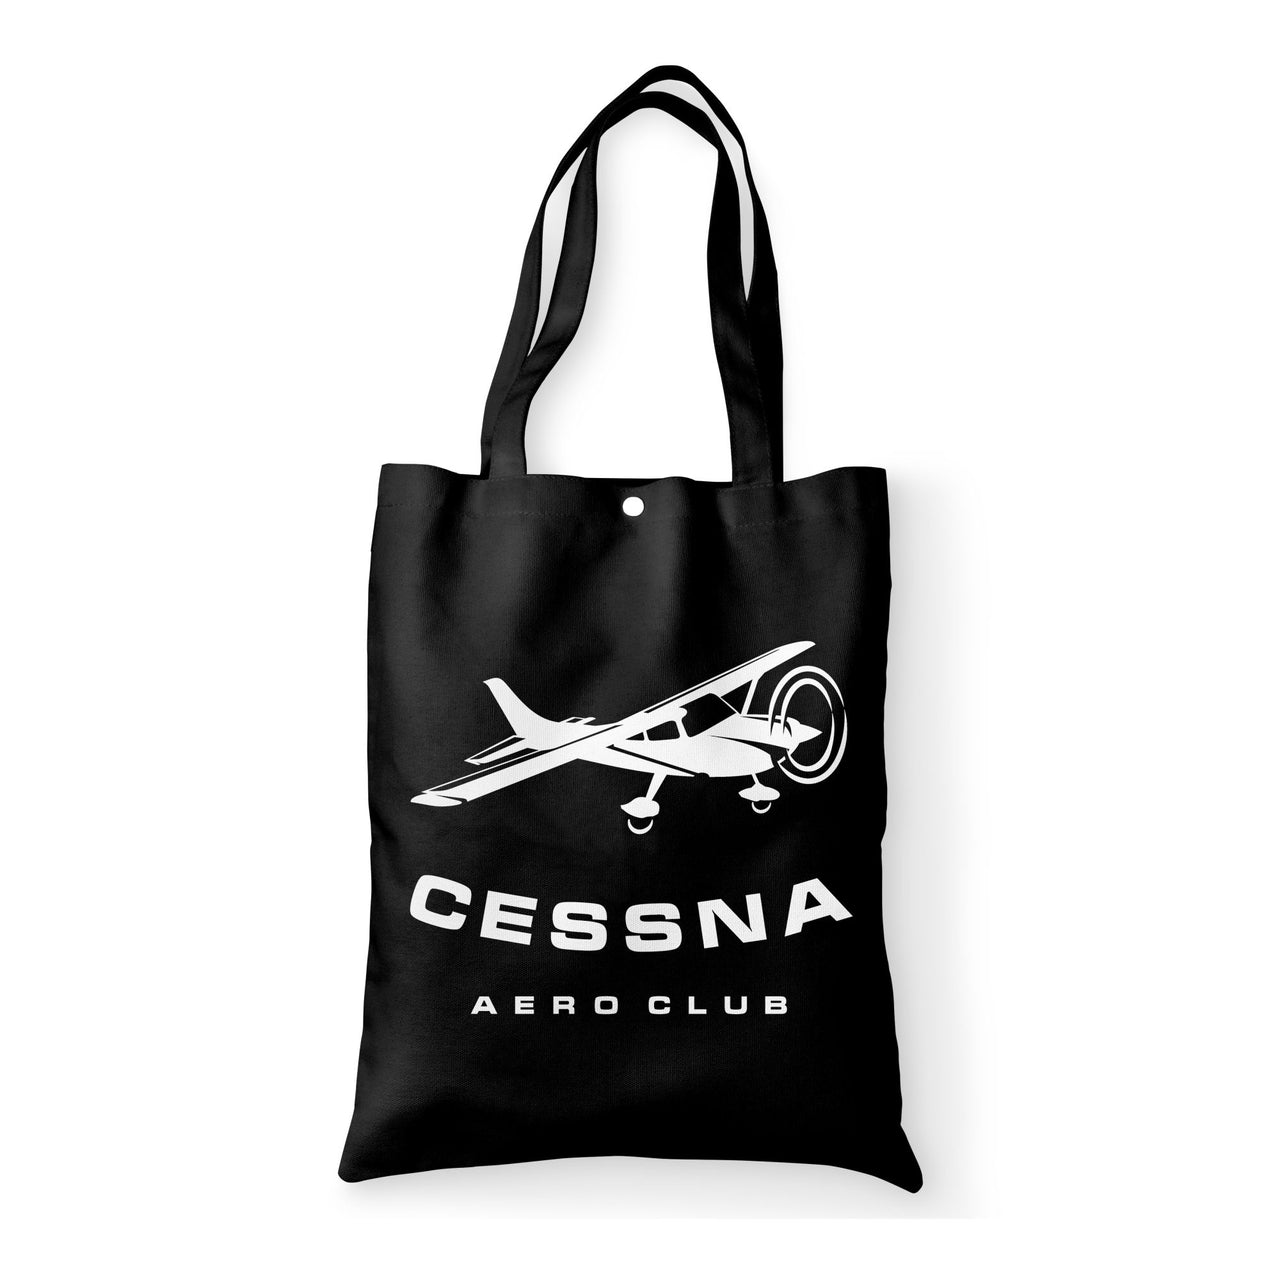 Cessna Aeroclub Designed Tote Bags